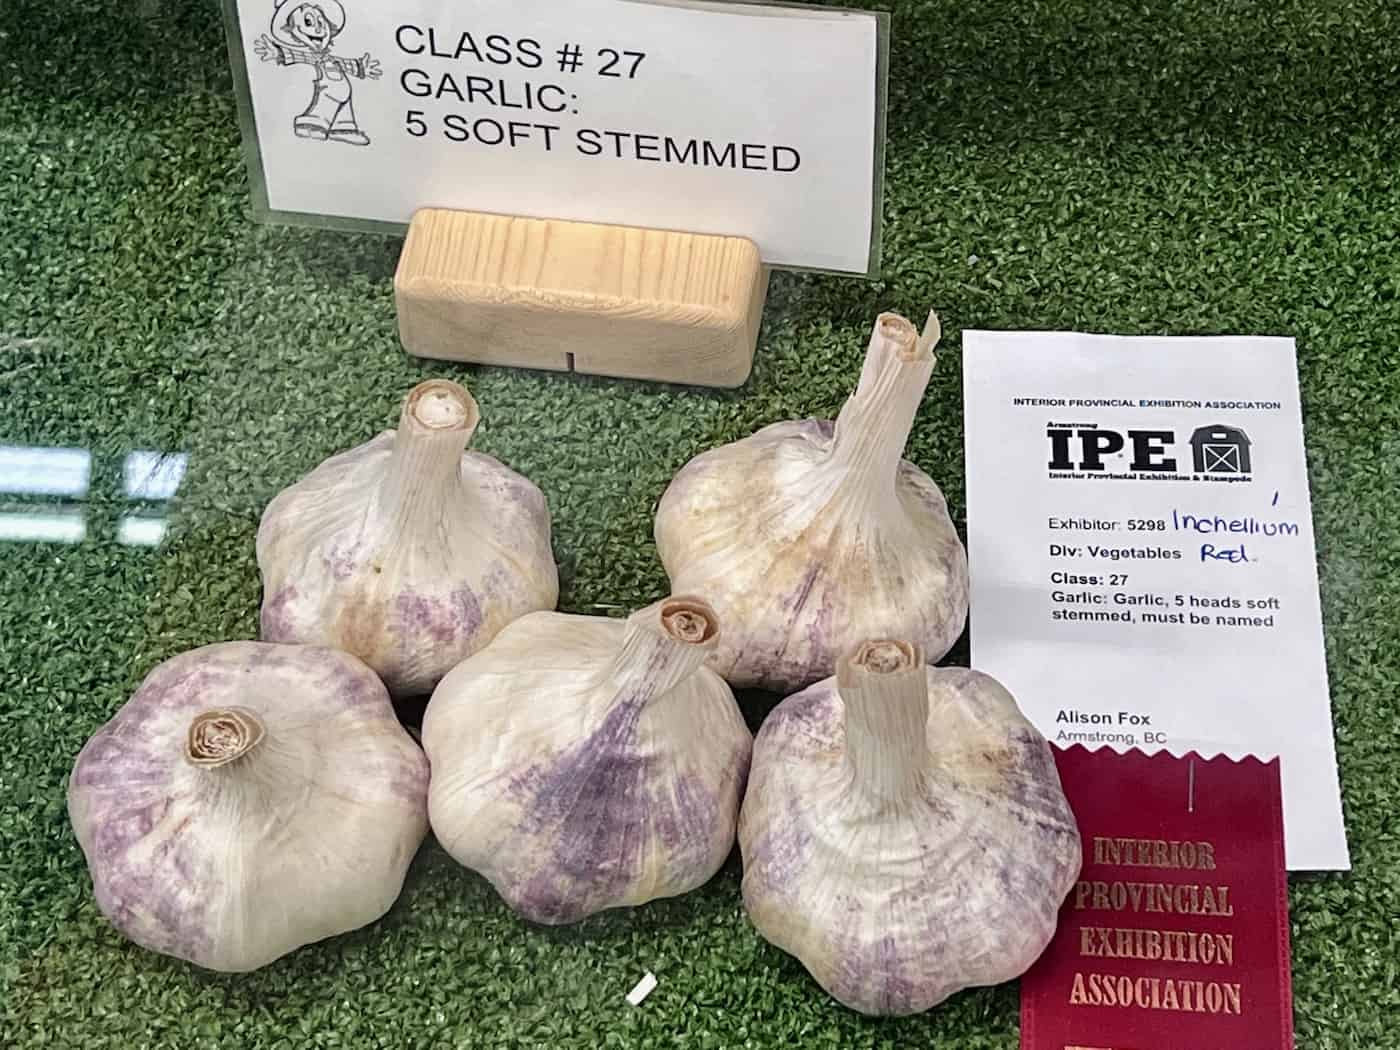 Inchelium red prize winning garlic armstrong ipe